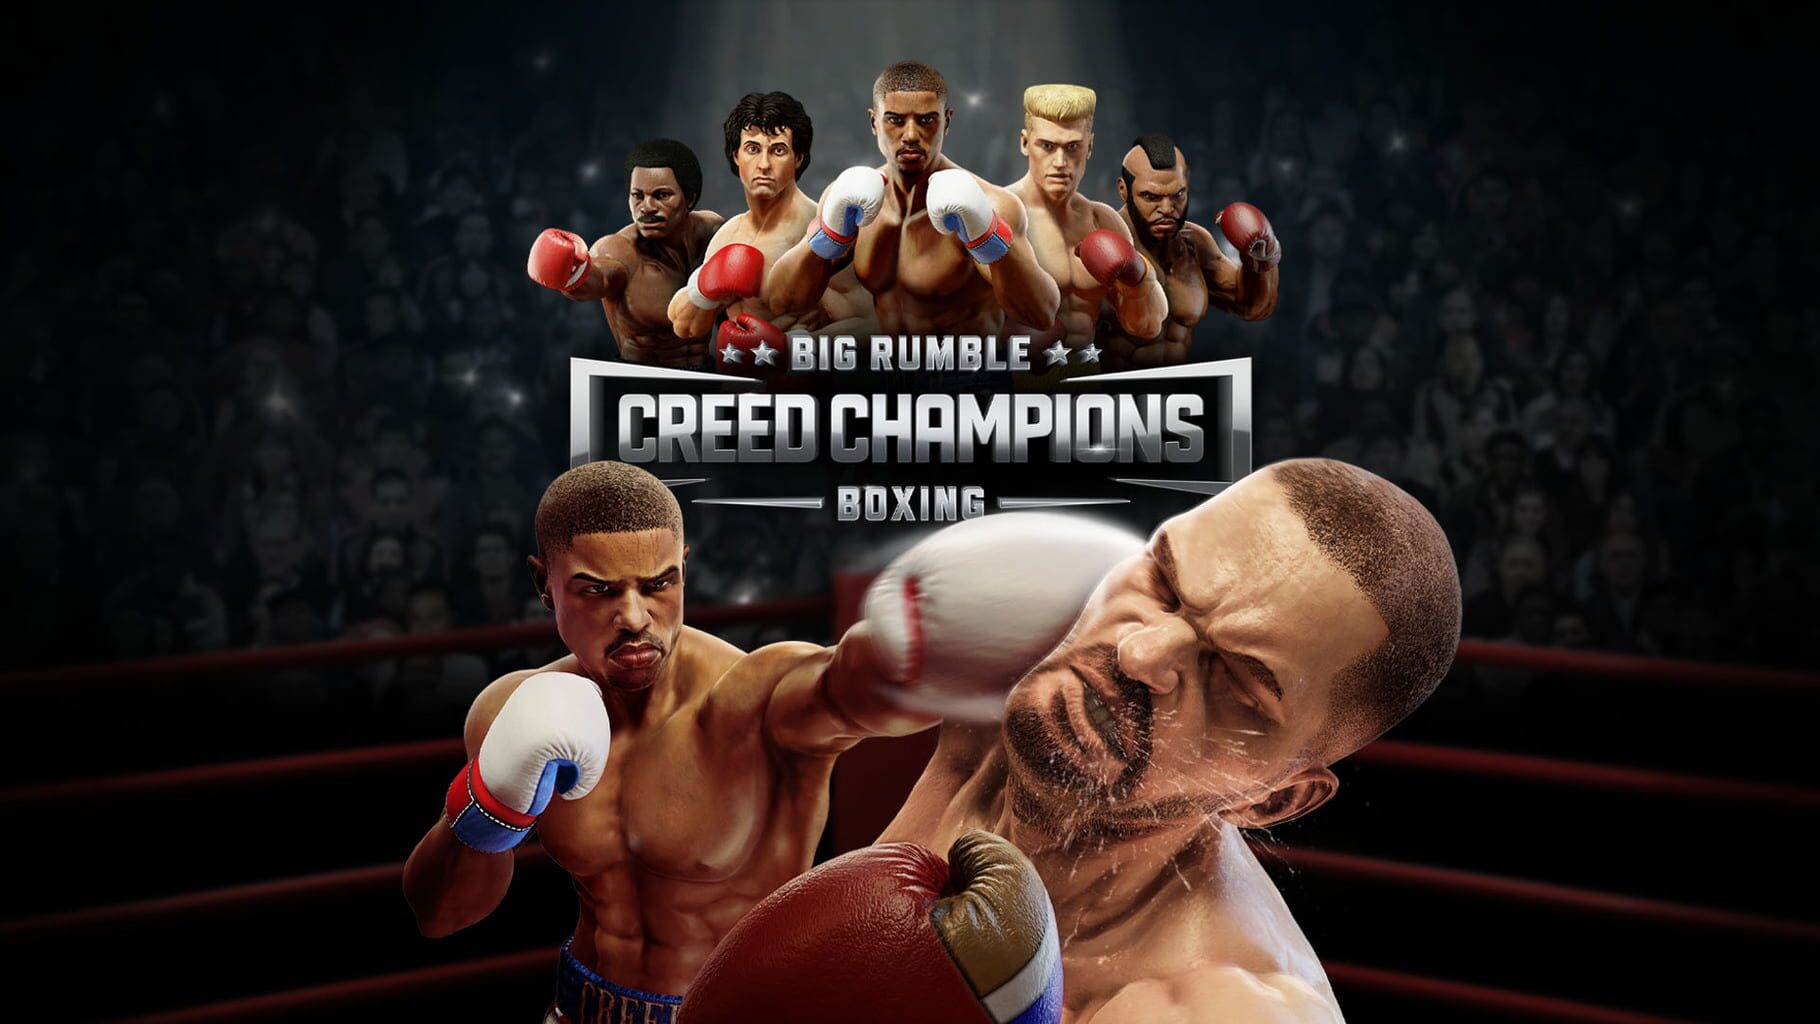 Big Rumble Boxing: Creed Champions artwork